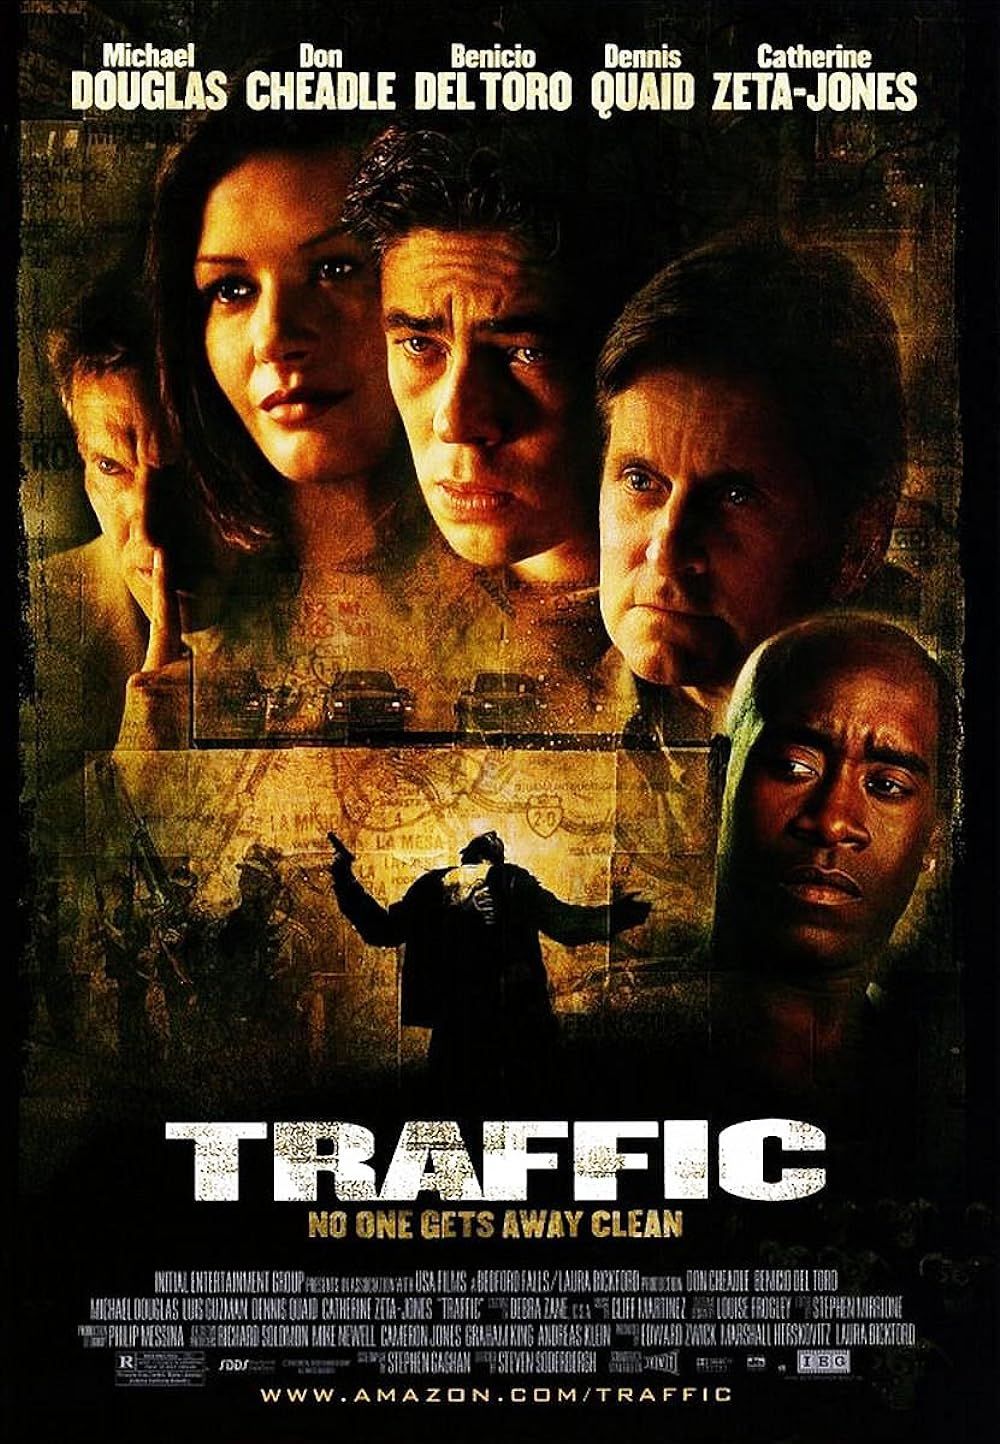 Traffic movie poster